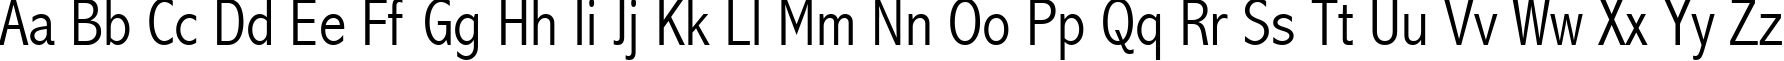 Пример написания английского алфавита шрифтом Abadi MT Condensed Light